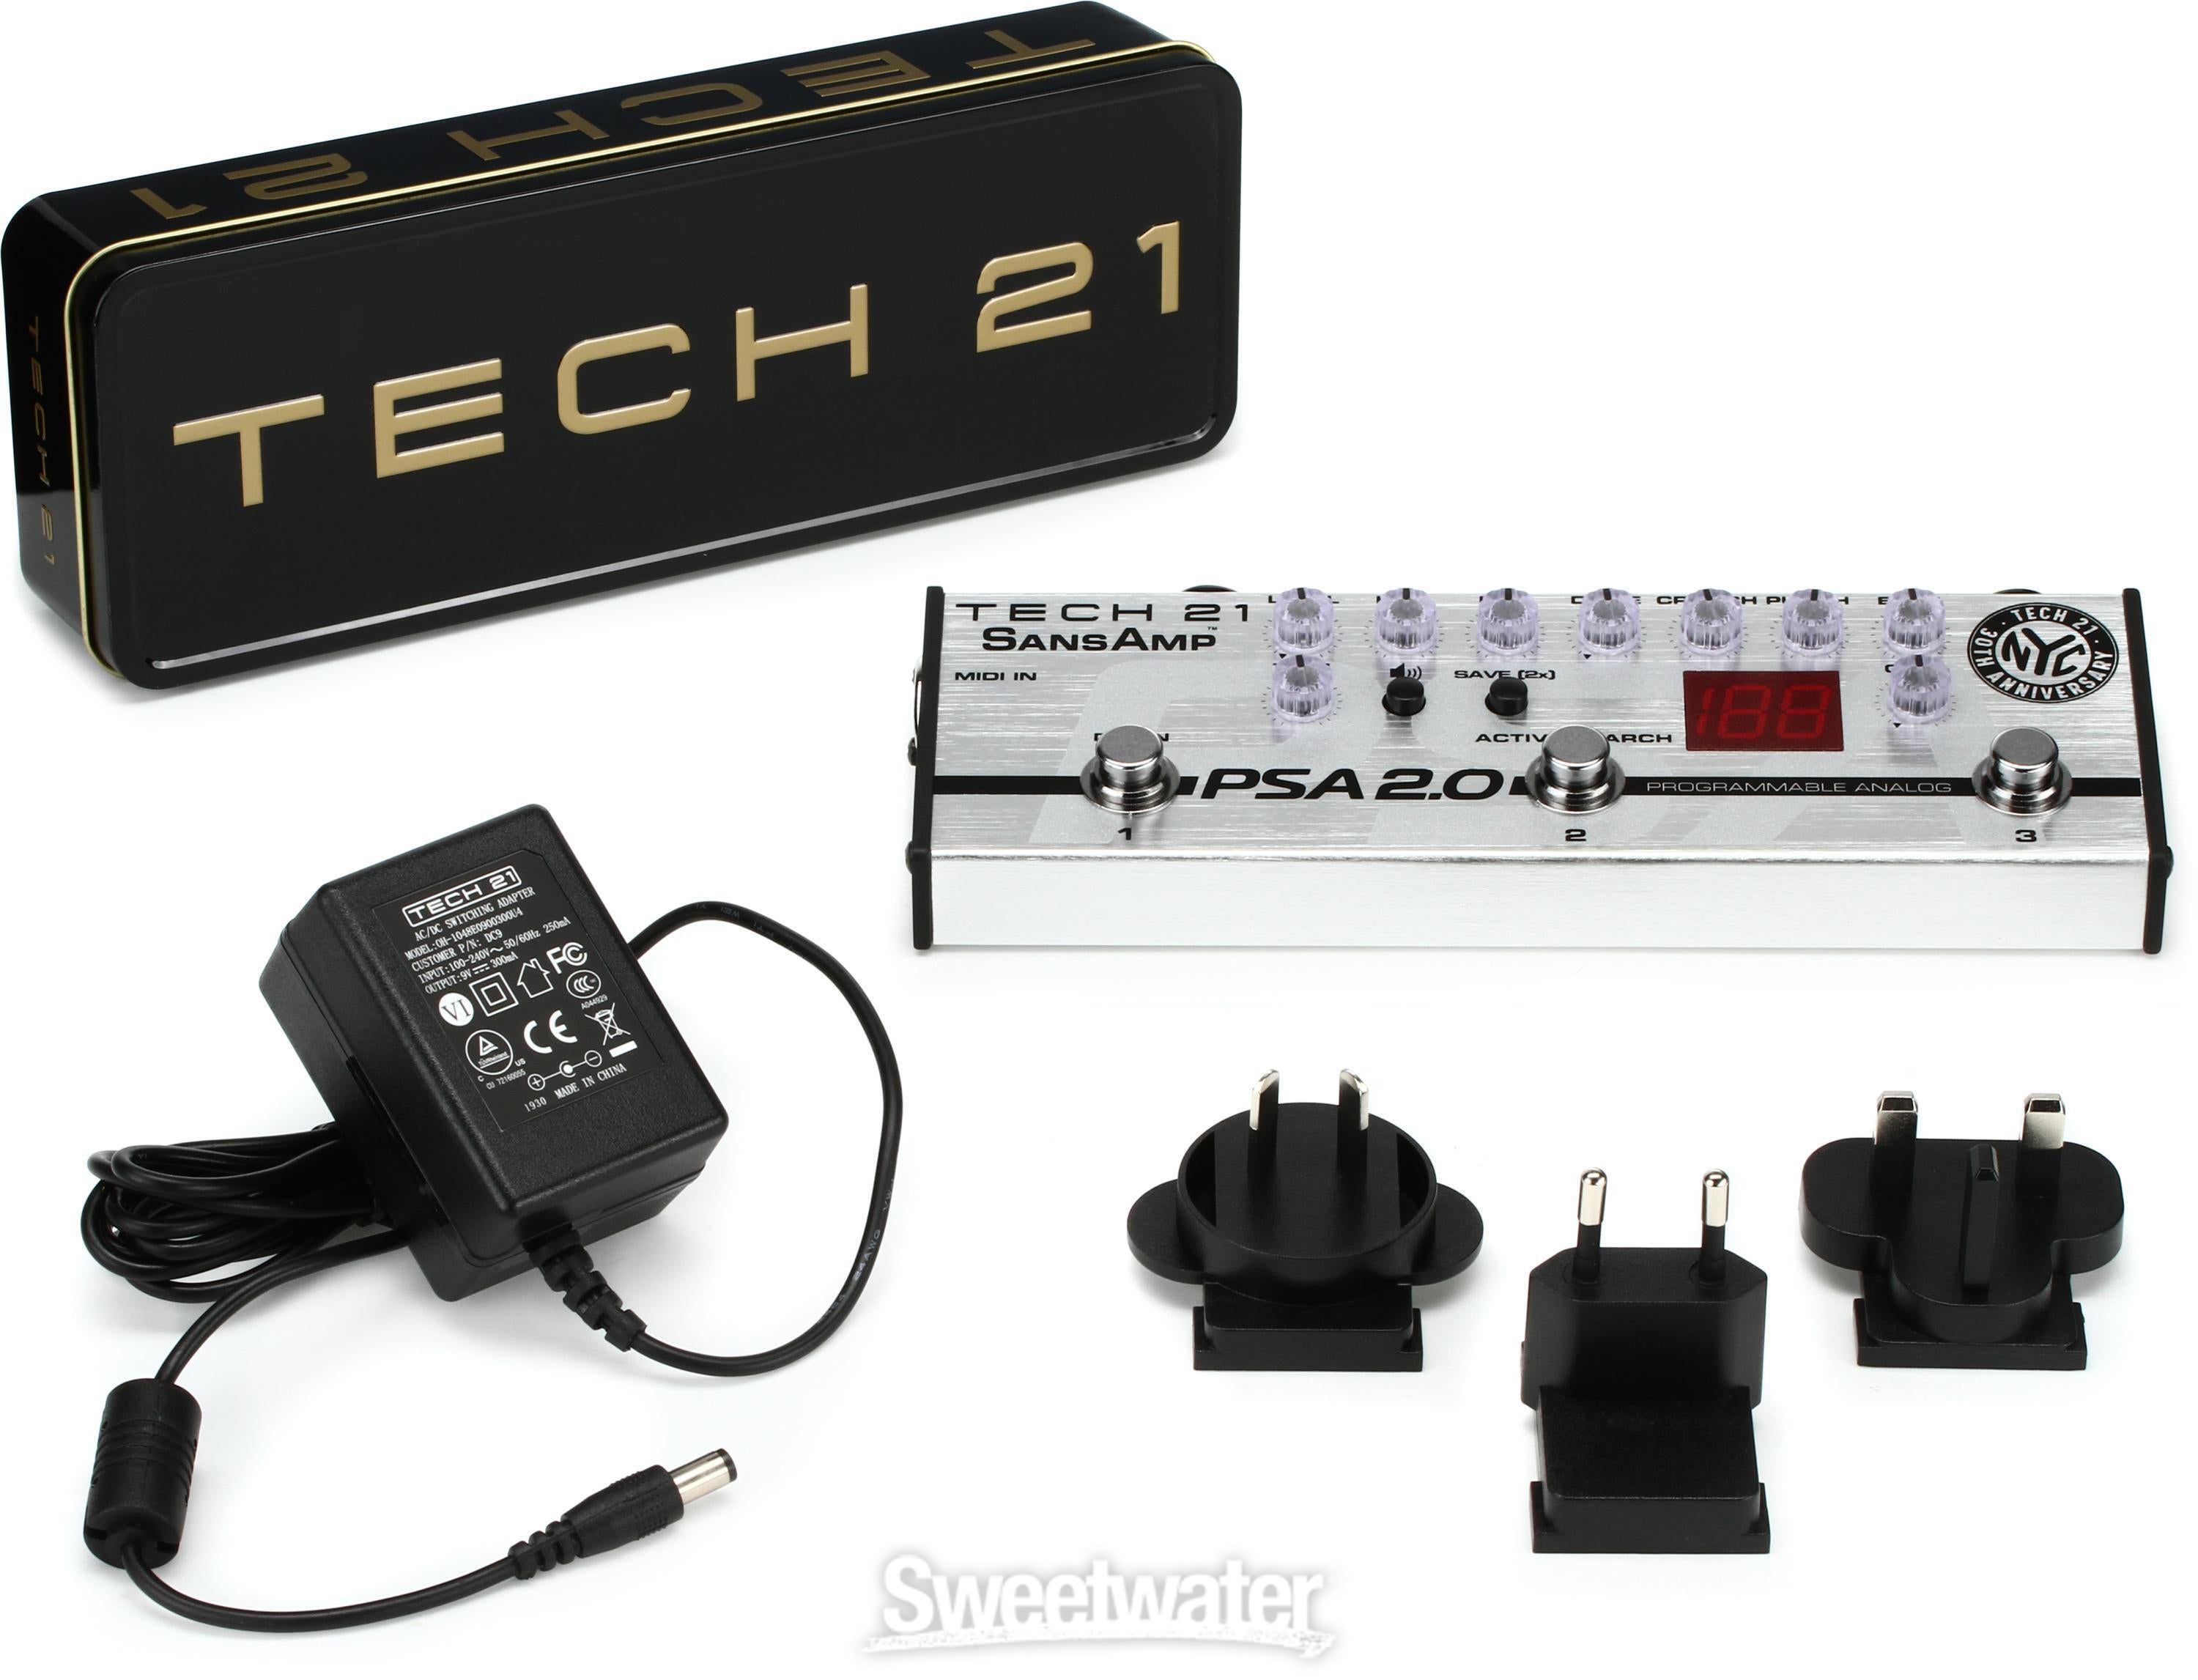 Tech 21 SansAmp PSA 2.0 Programmable Instrument Preamp Pedal 